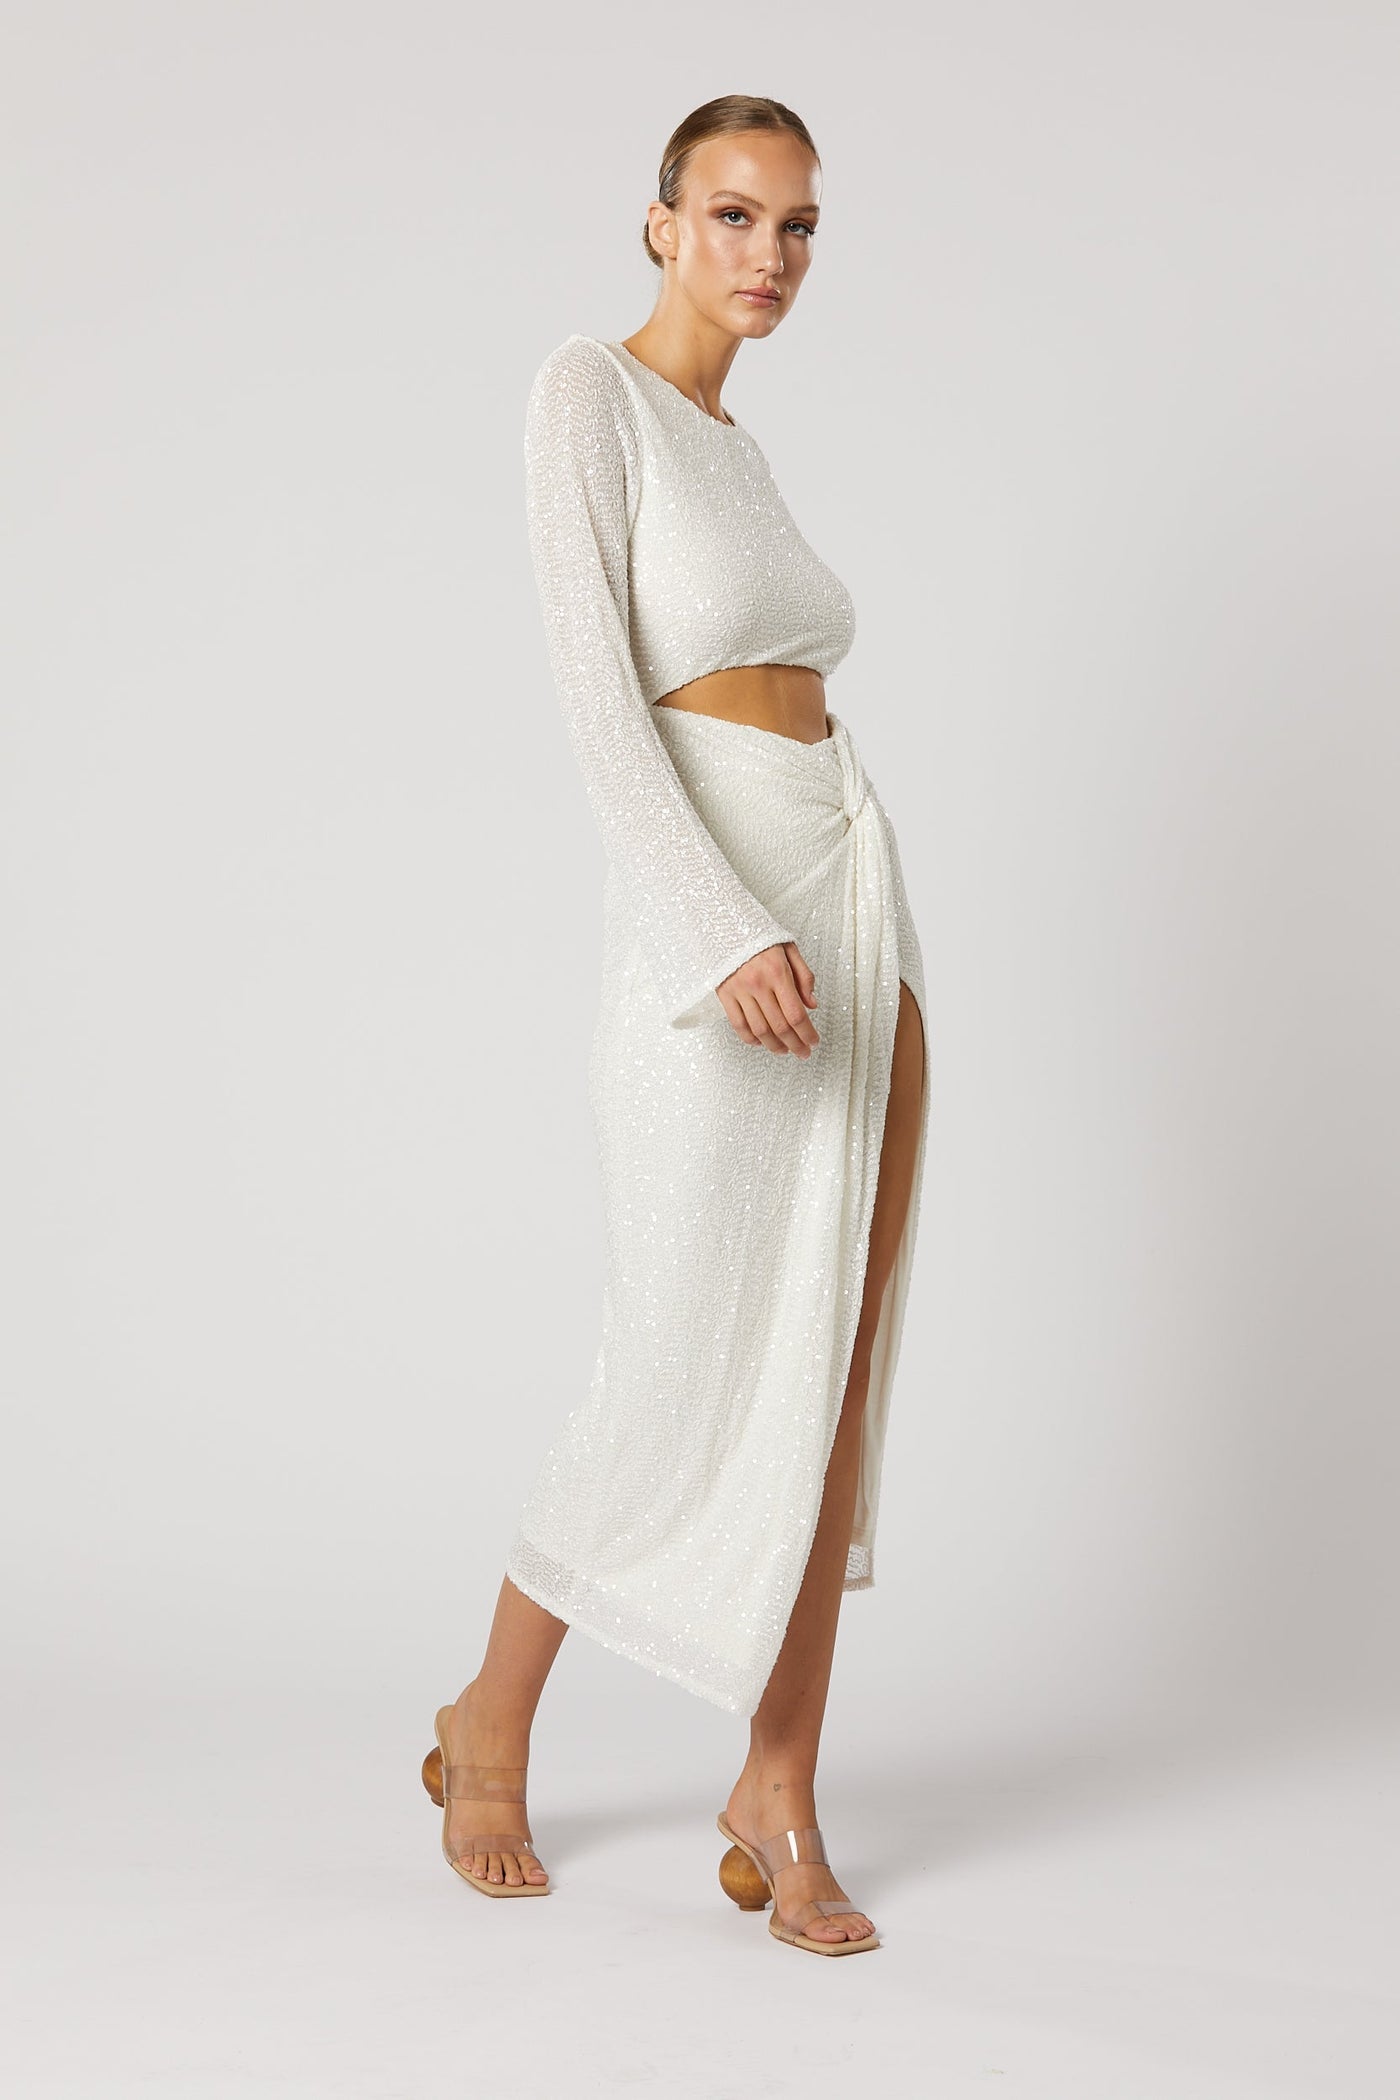 Reyna Knot Midi Dress - White - SHOPJAUS - JAUS